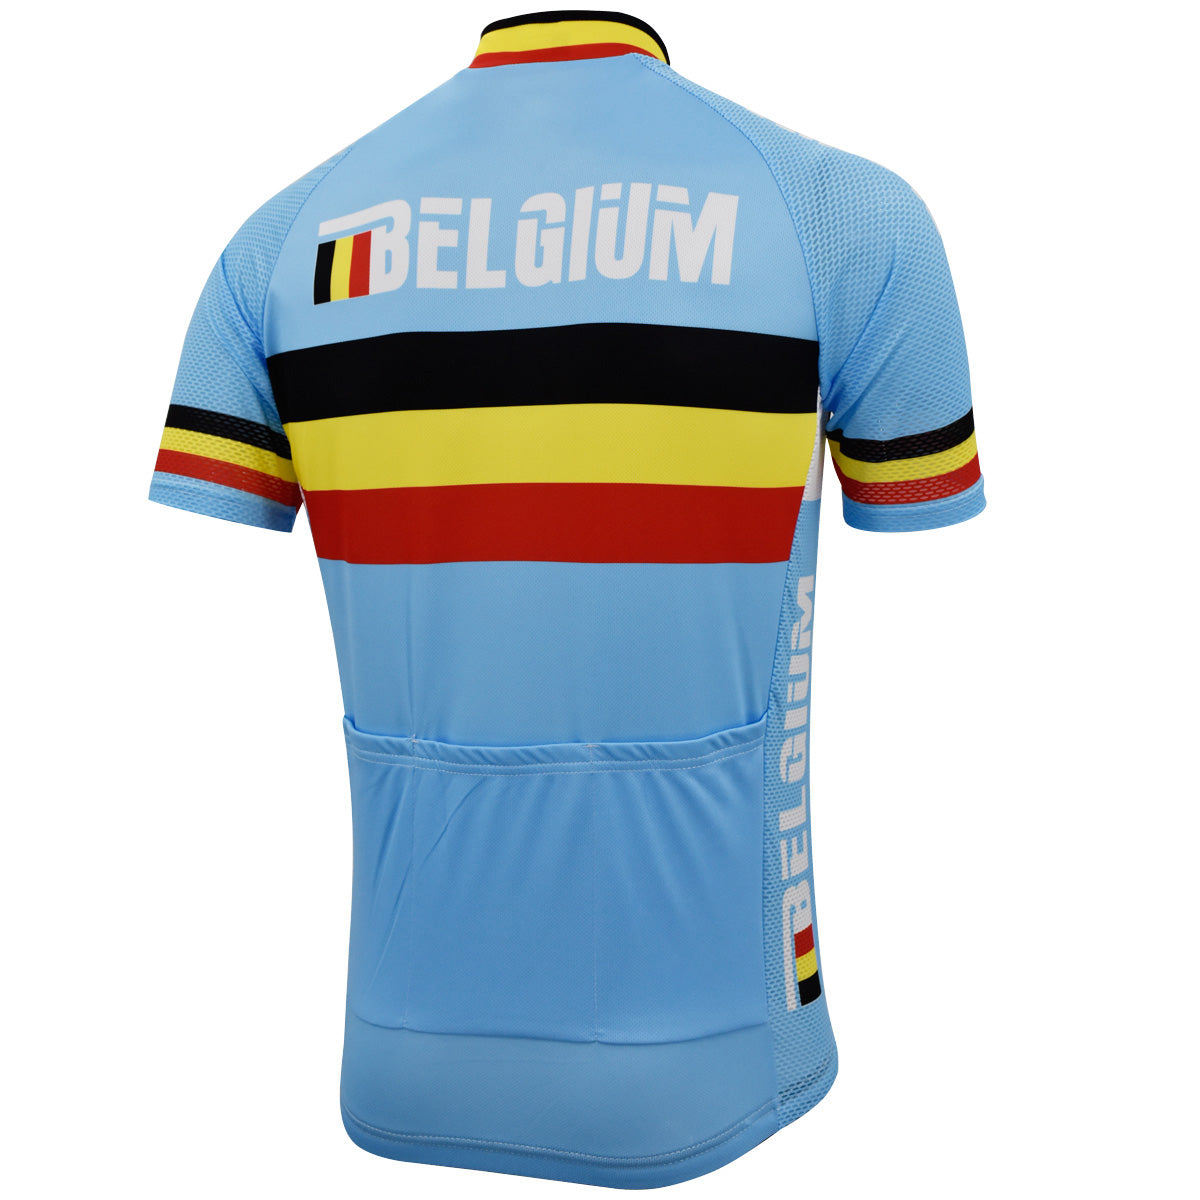 2013 Belgium Cycling Team Cycling Jersey